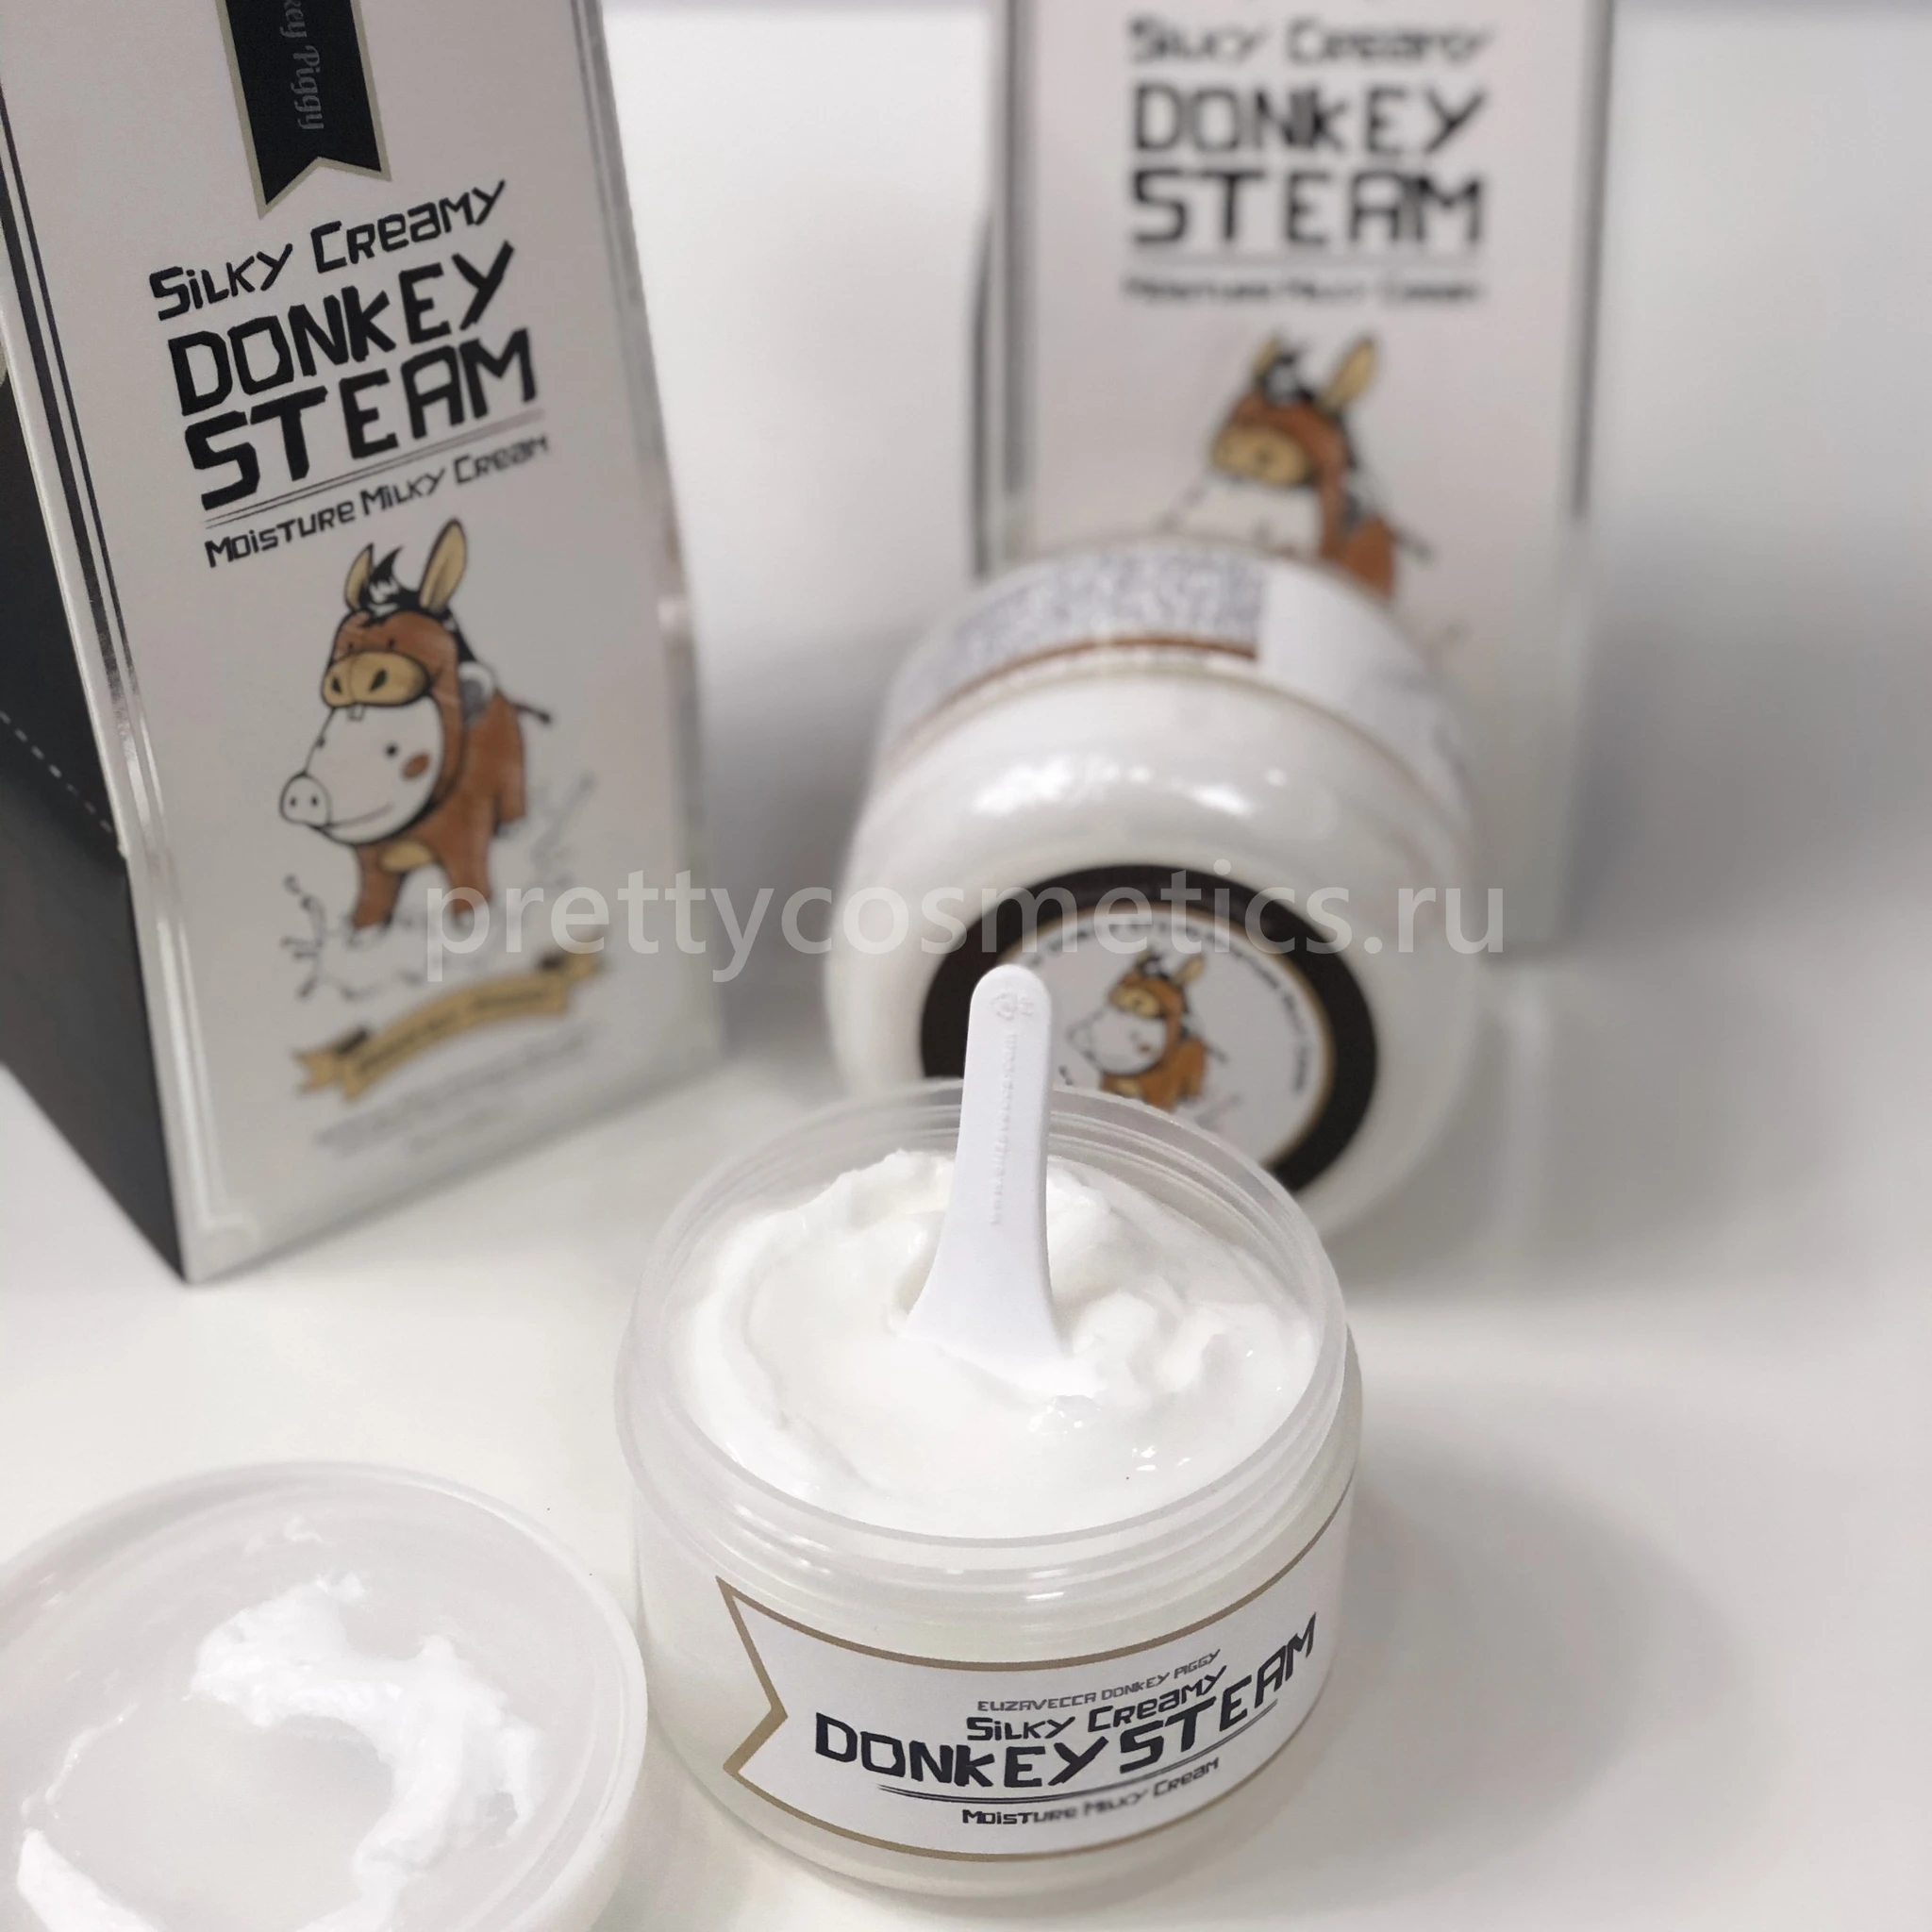 Silky creamy donkey steam cream moisture milky cream фото 32